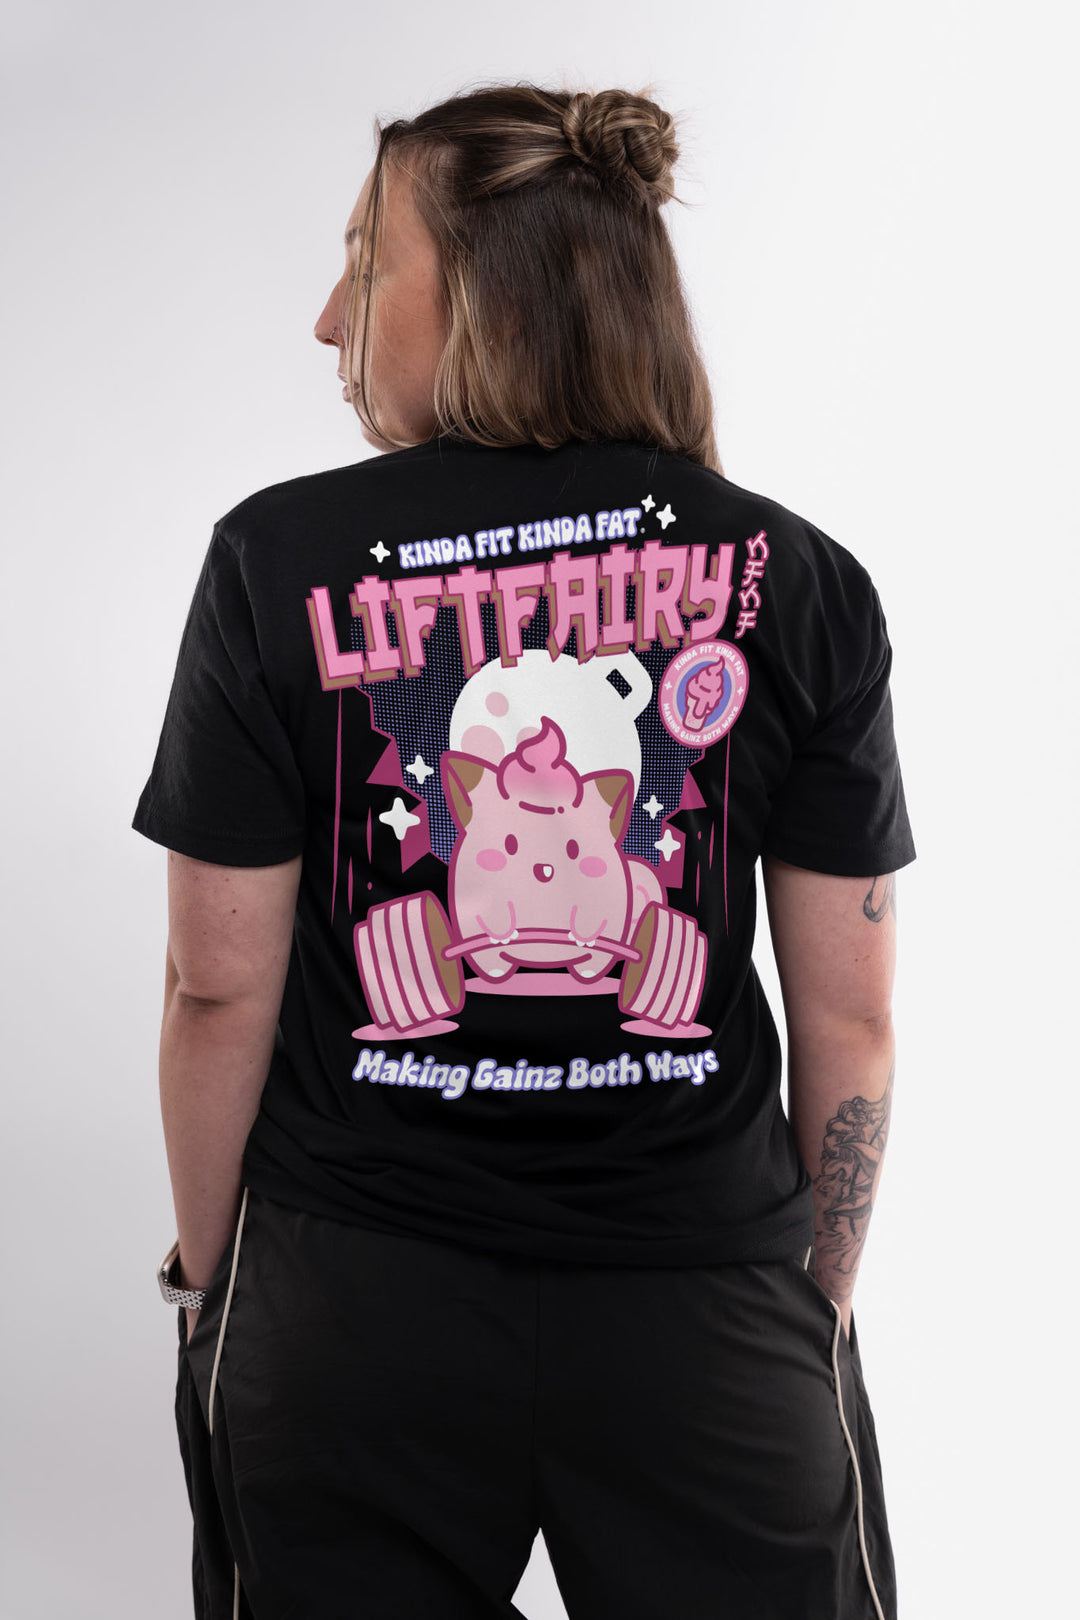 Liftfairy Signature Blend T-Shirt